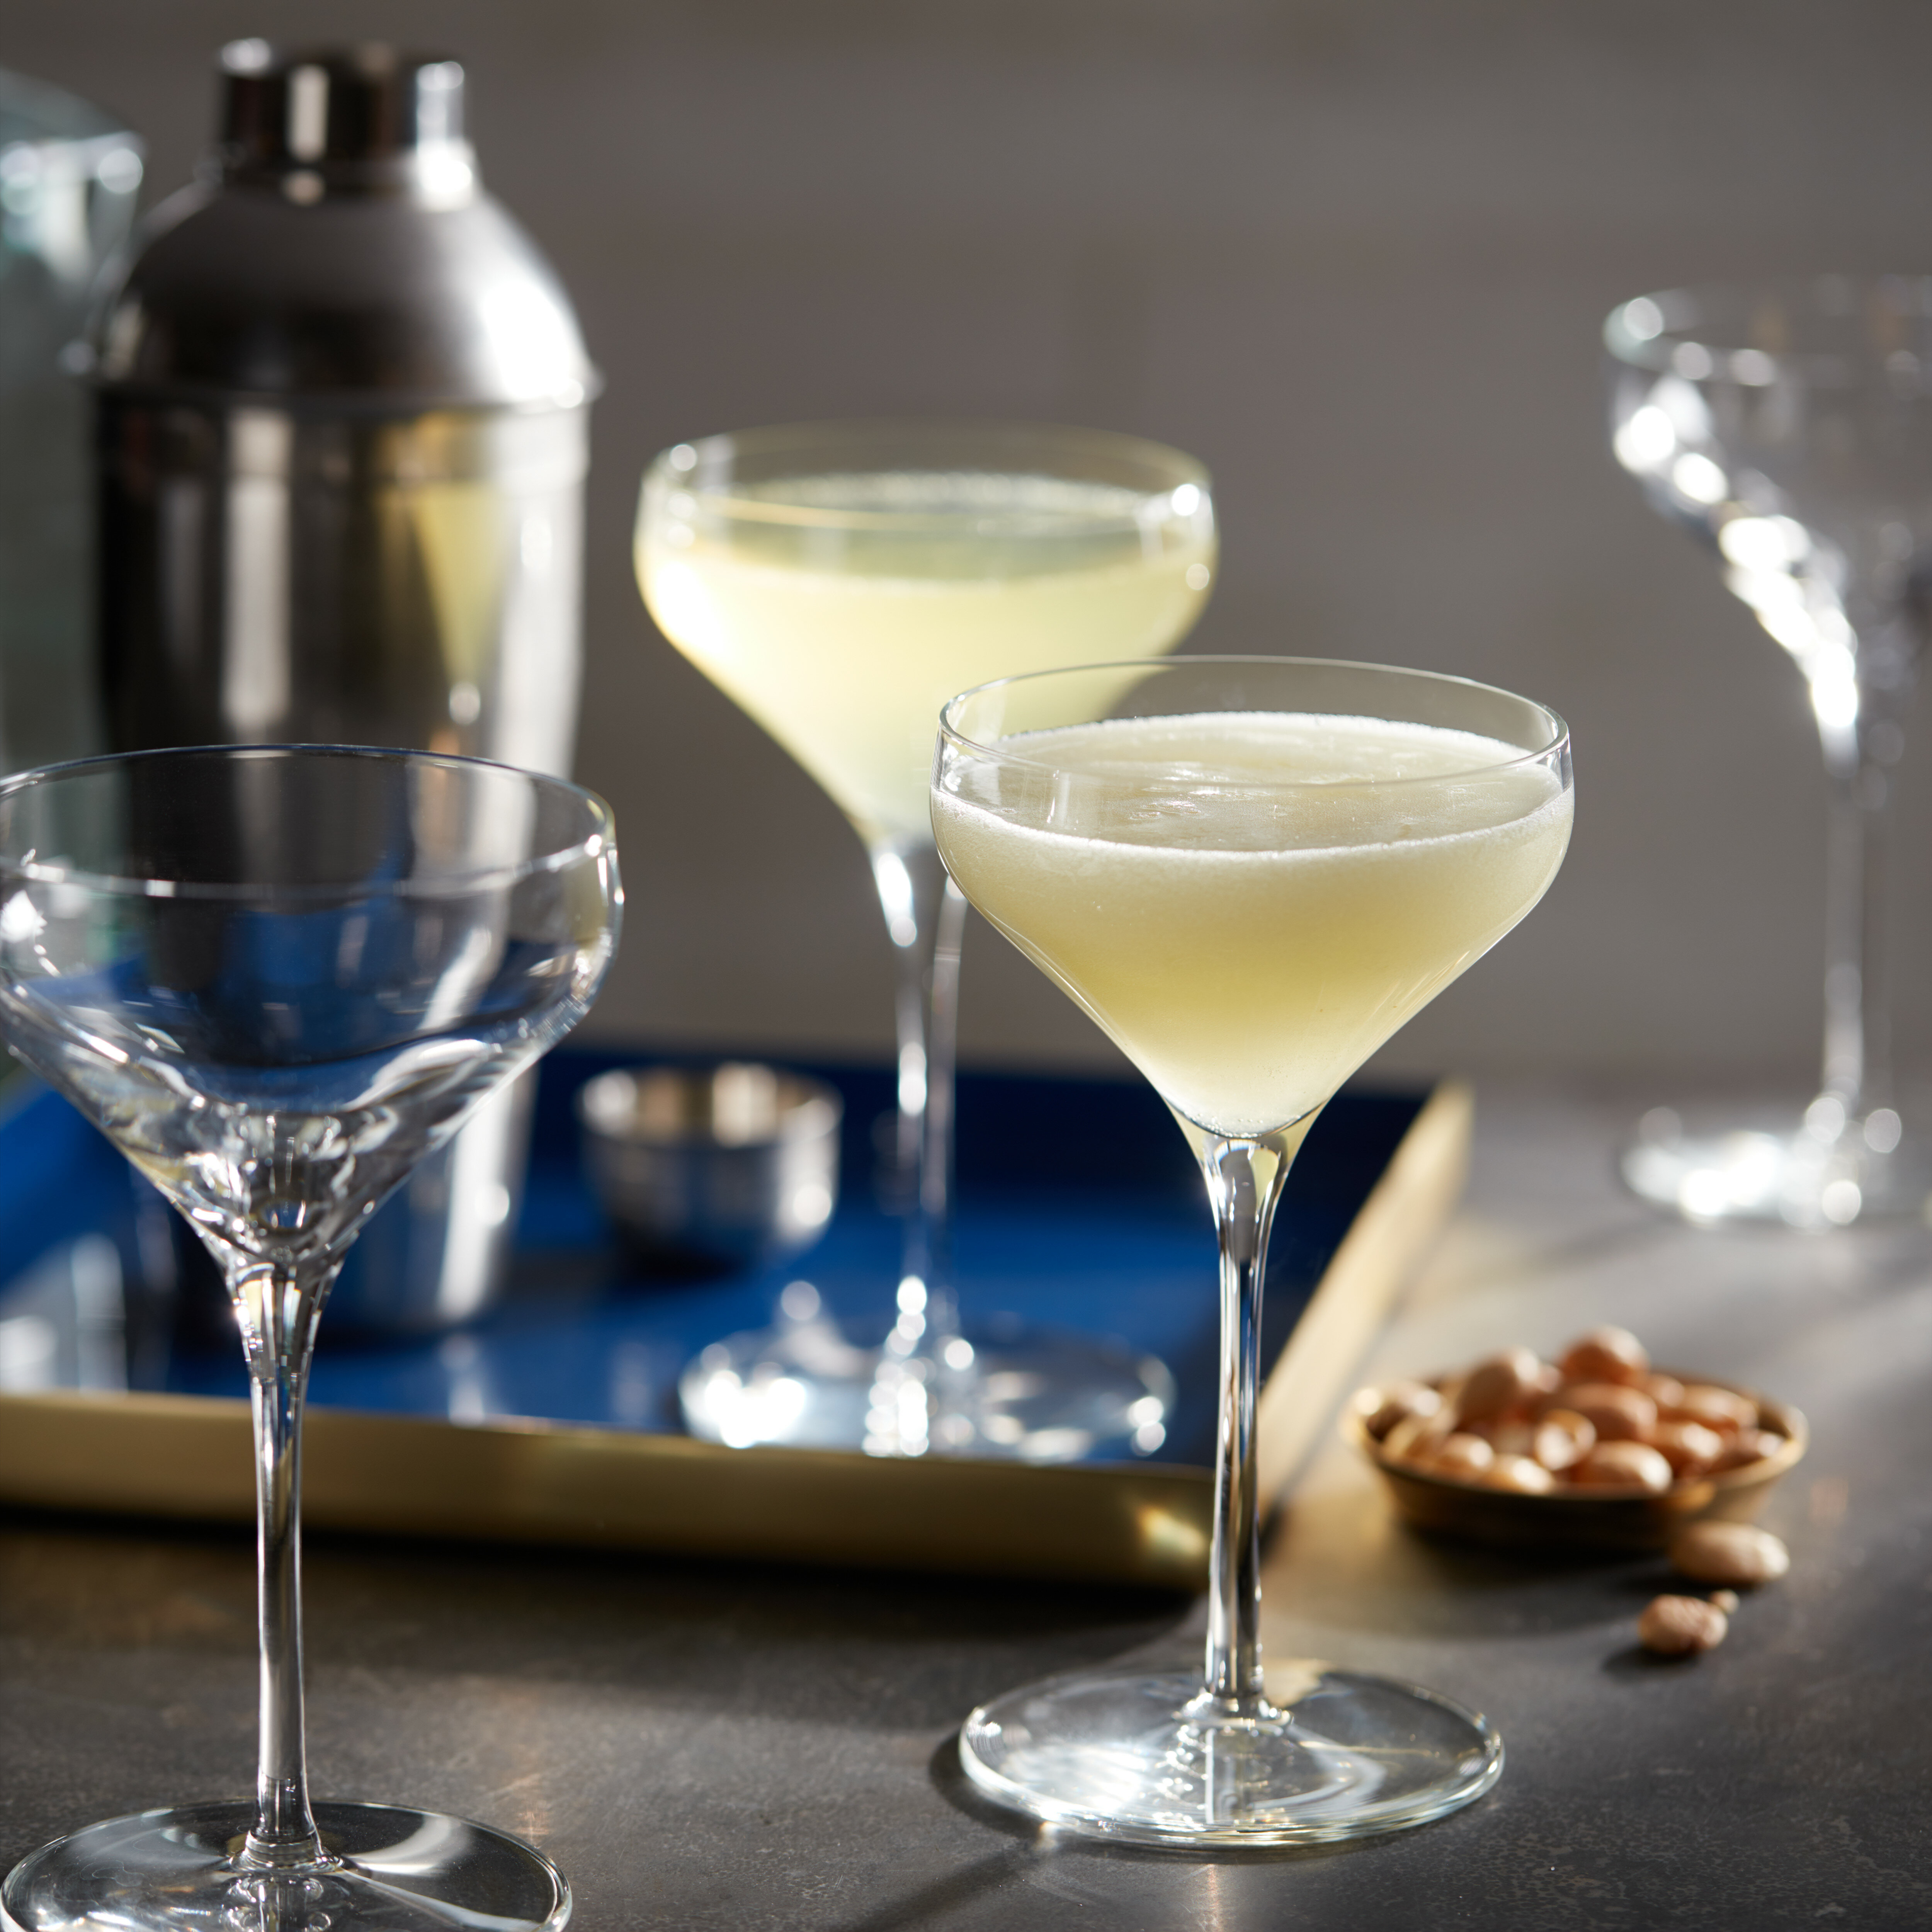 Vintage Art Deco Coupe for Champagne, Martini, Cocktails, Glasses | Set of 6 | 7 oz Classic Cocktail Glassware - Manhattan, Cosmopolitan, Sidecar